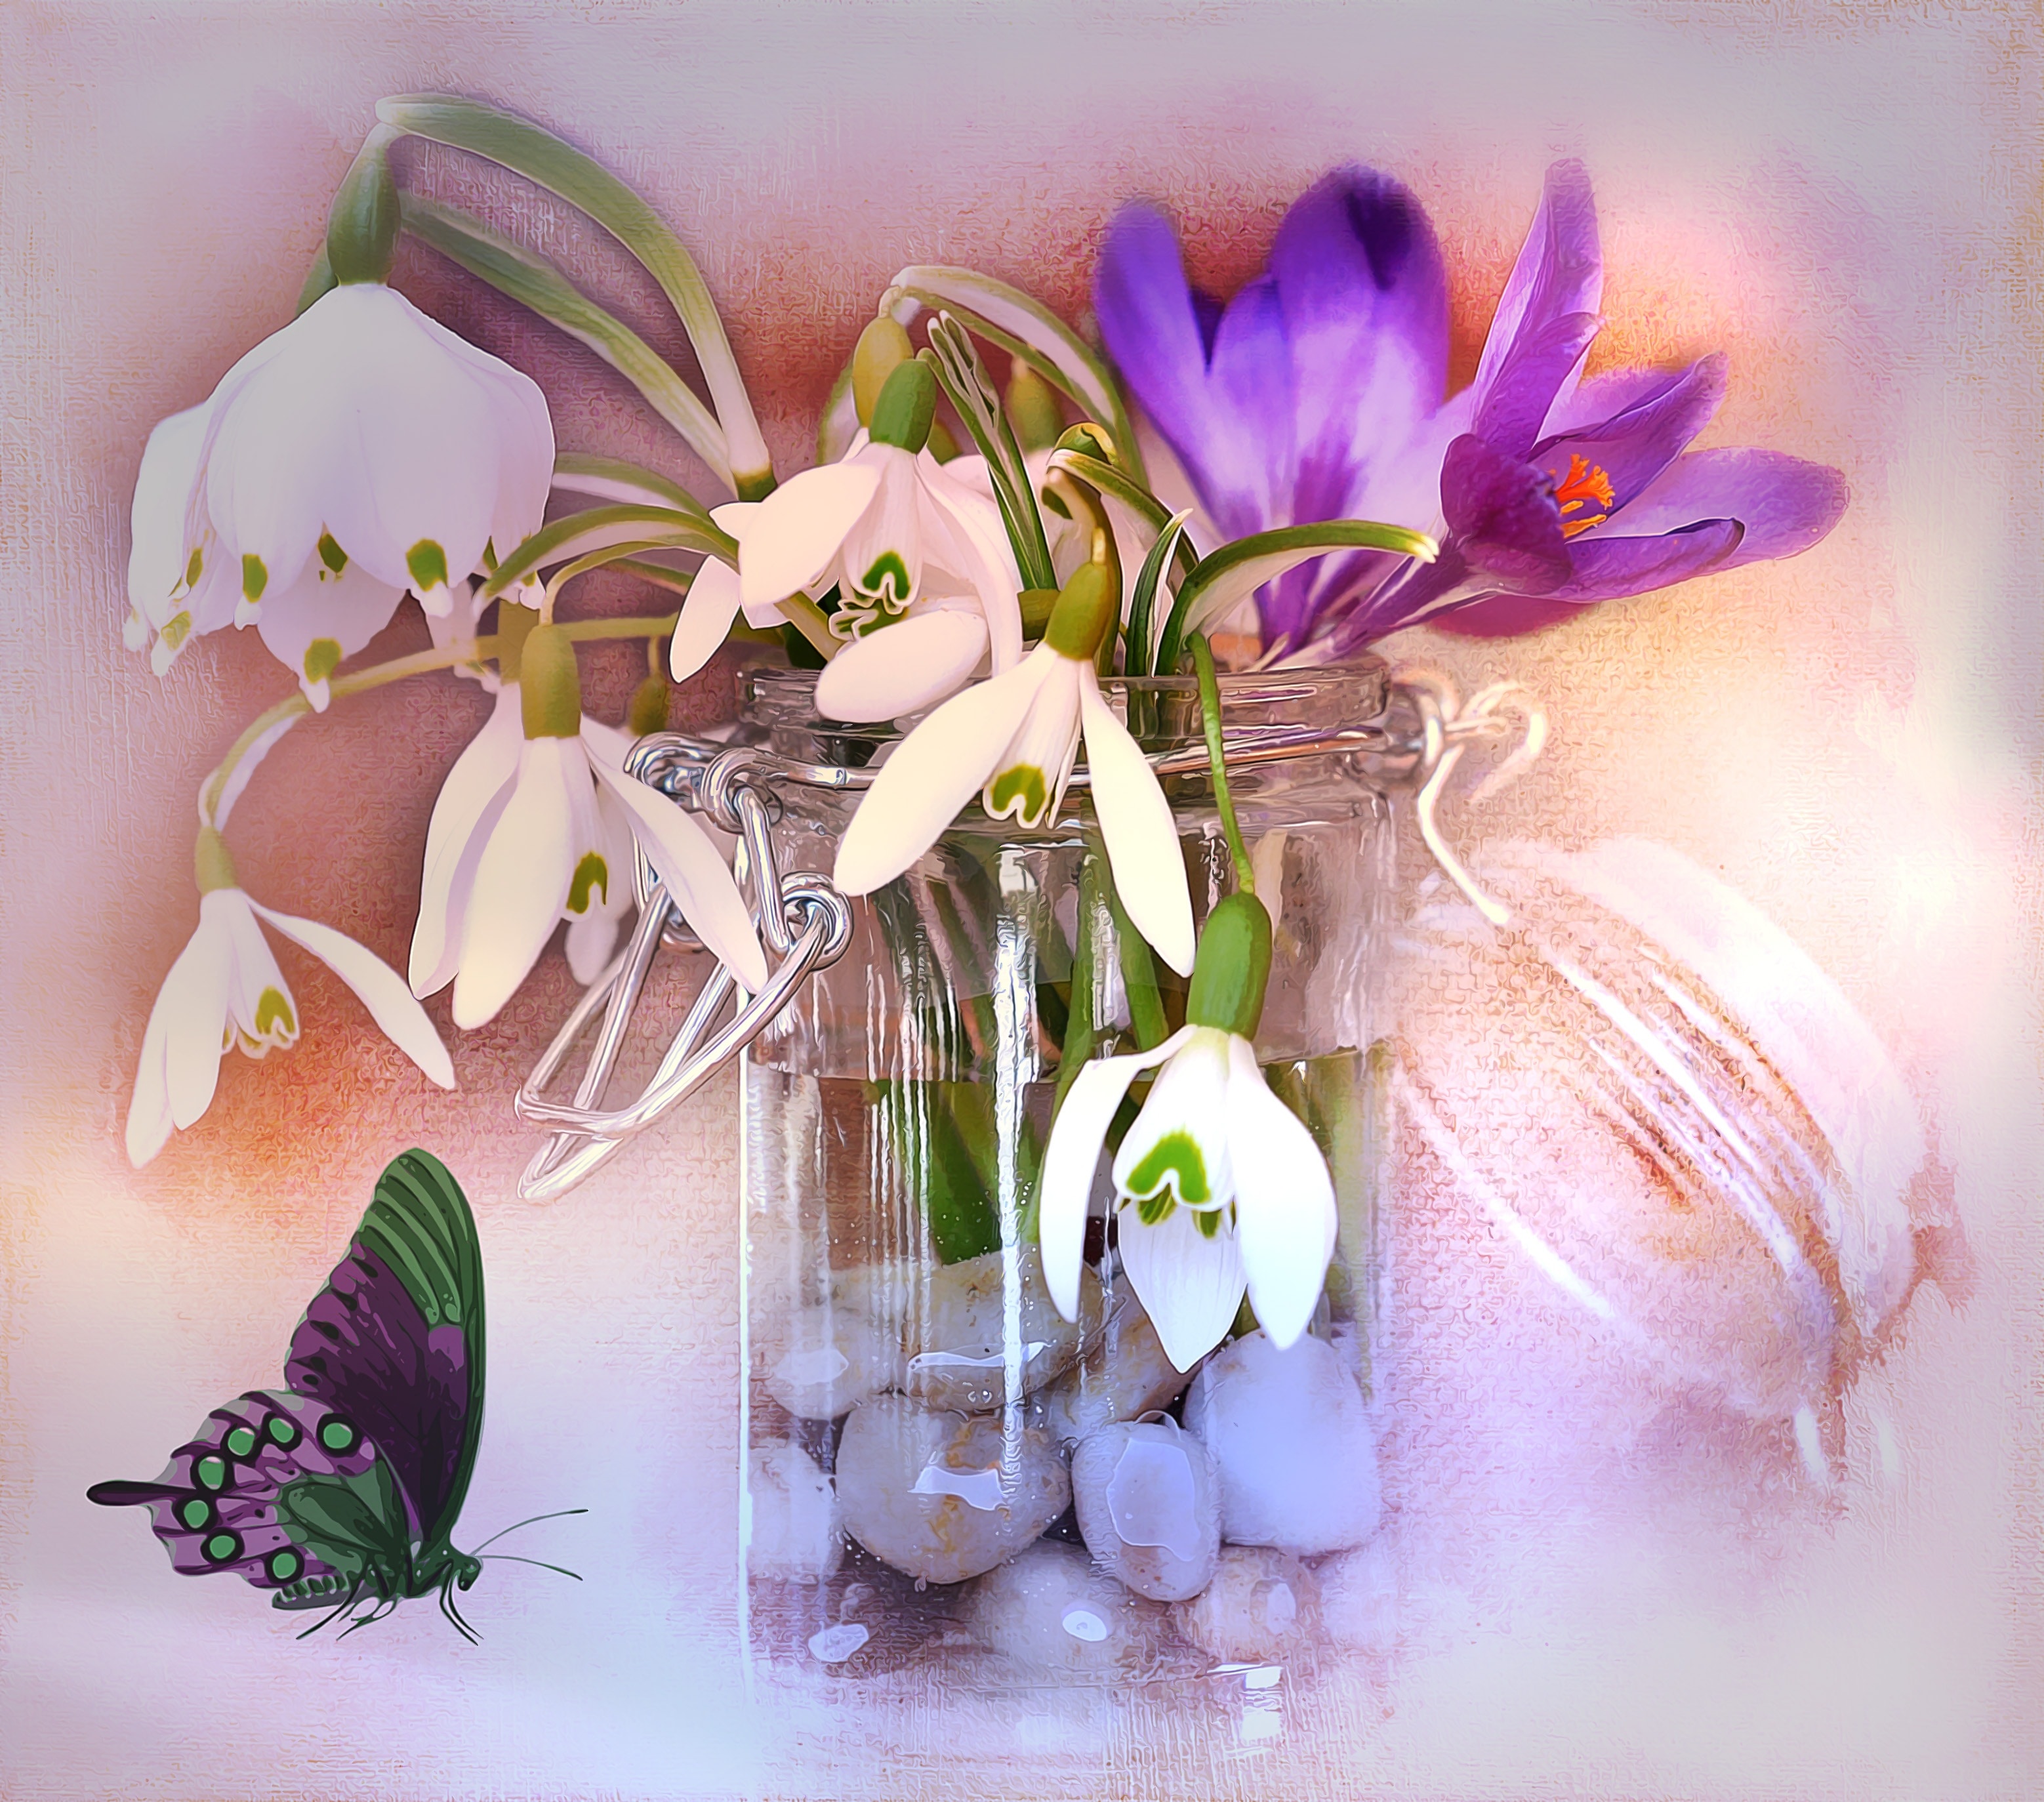 illustration of white and purple petaled flower